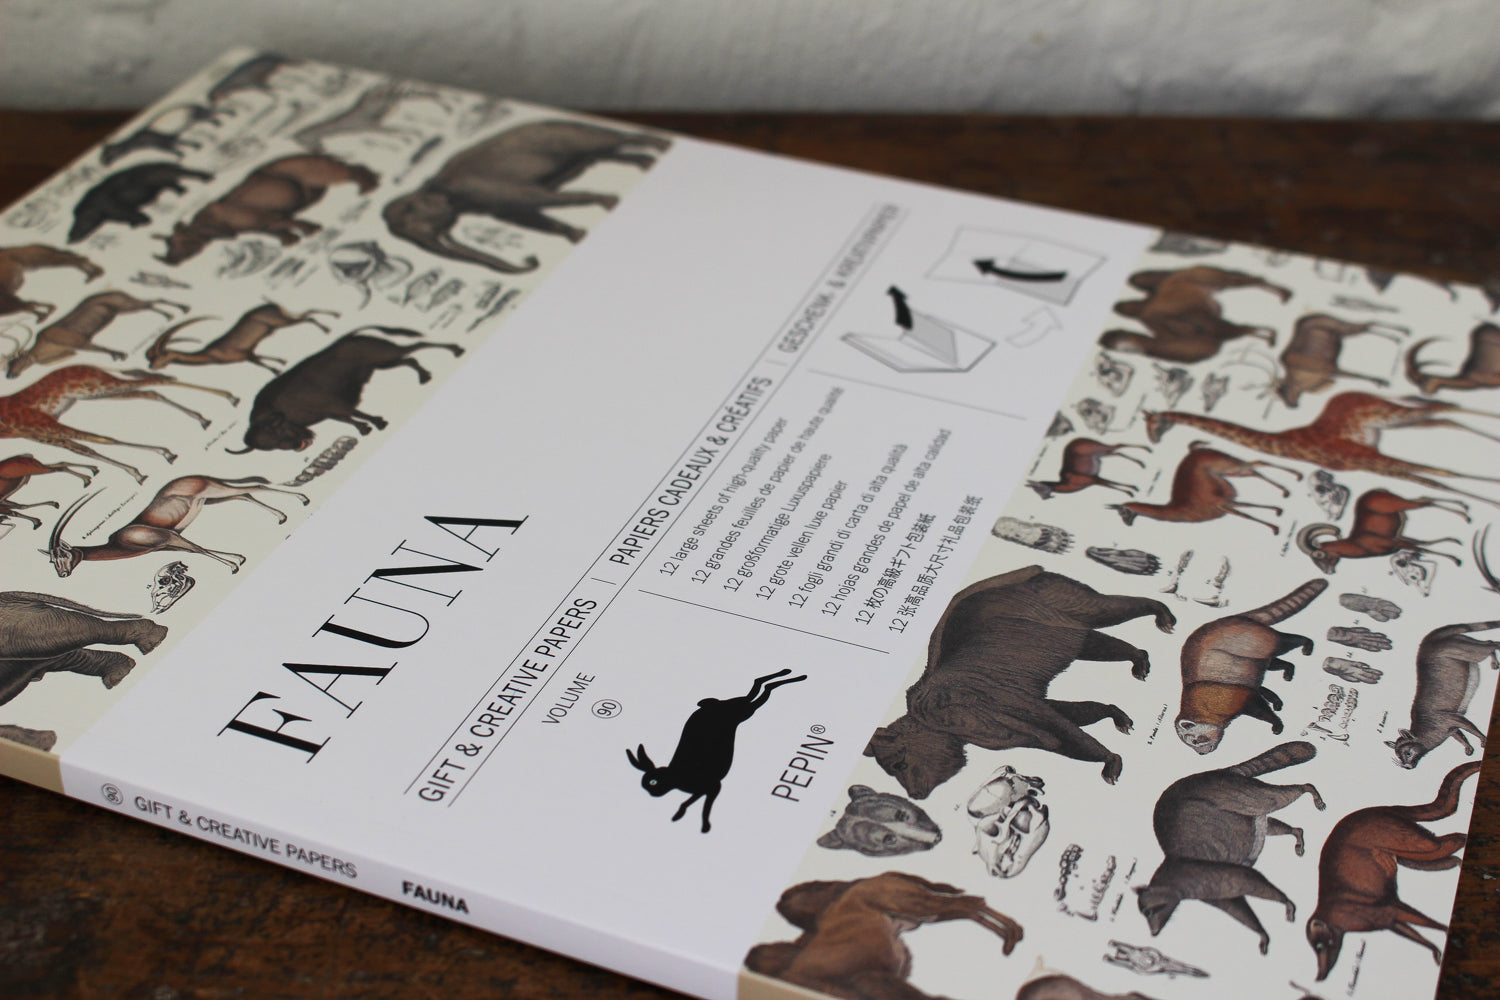 Pepin Press Gift & Creative Papers Book - Fauna